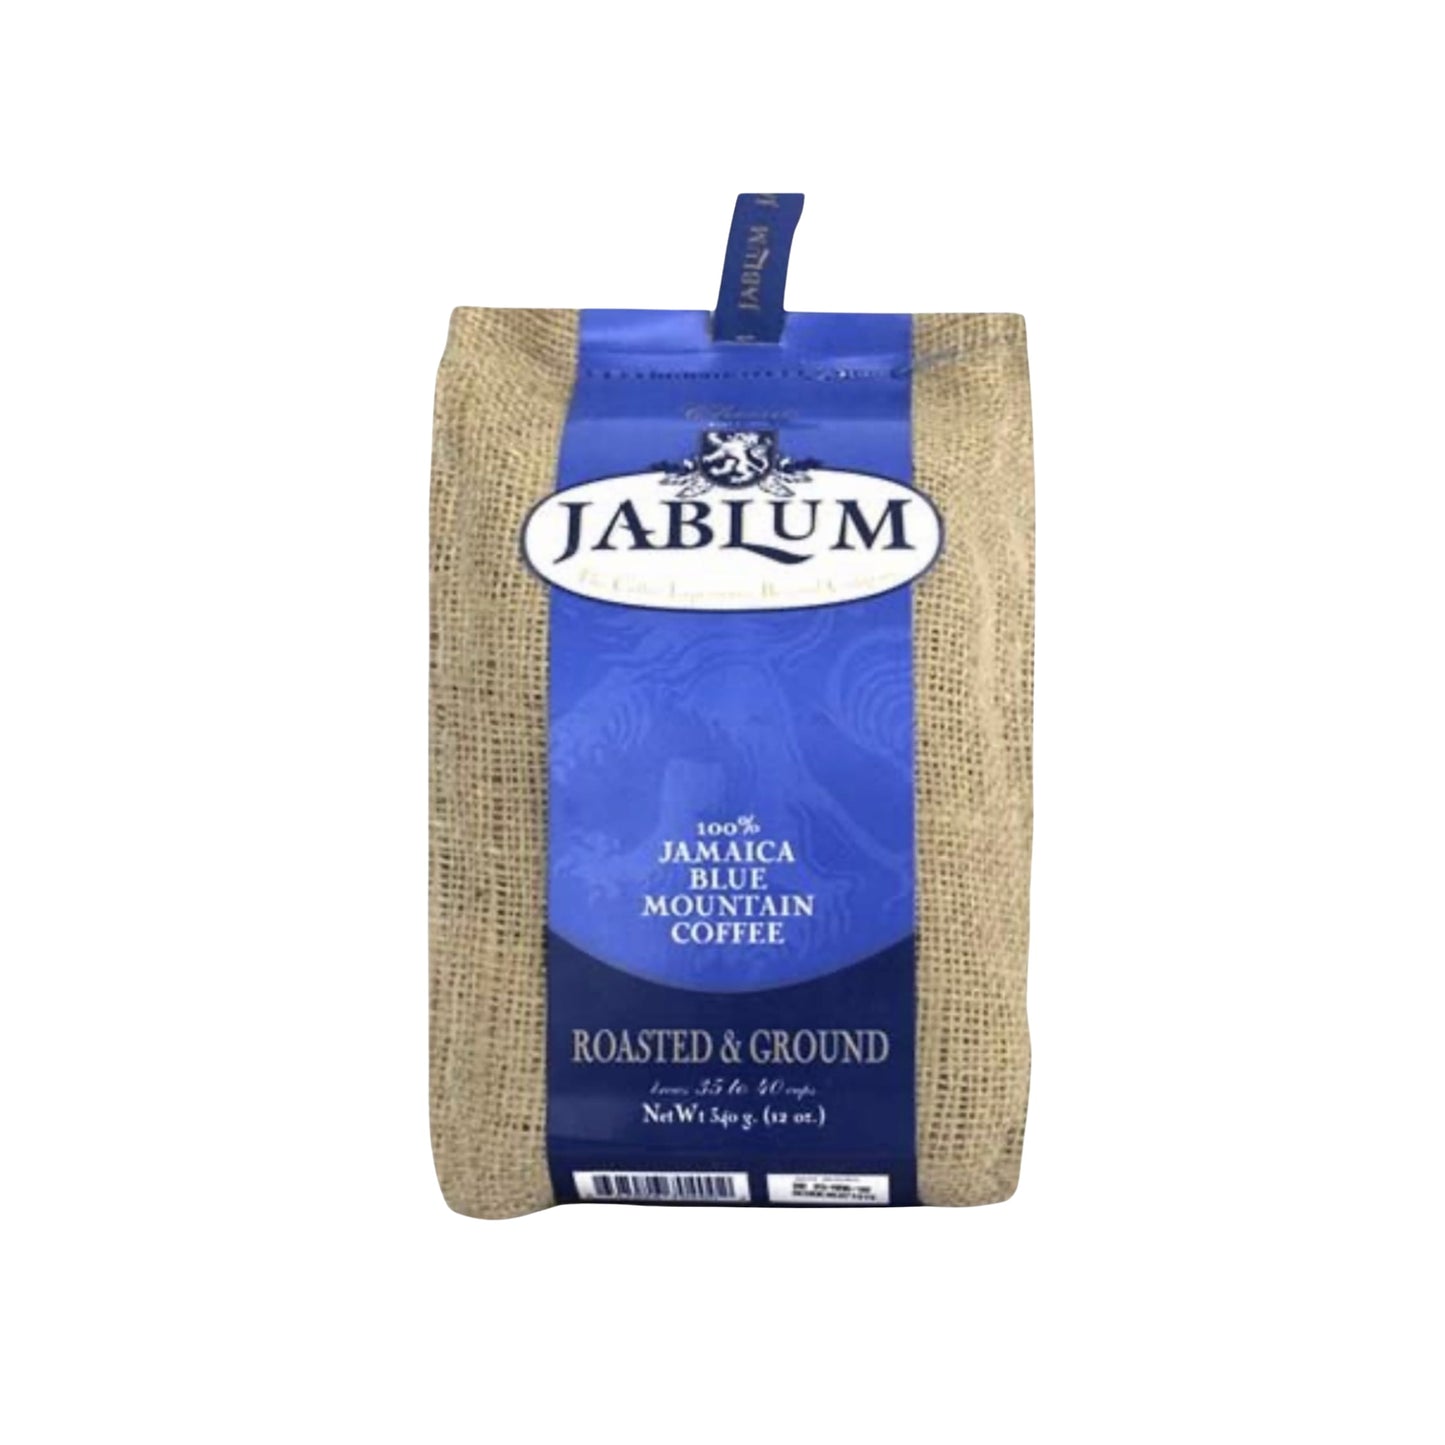 Jablum Blue Mountain Roasted & Ground Coffee - 8oz